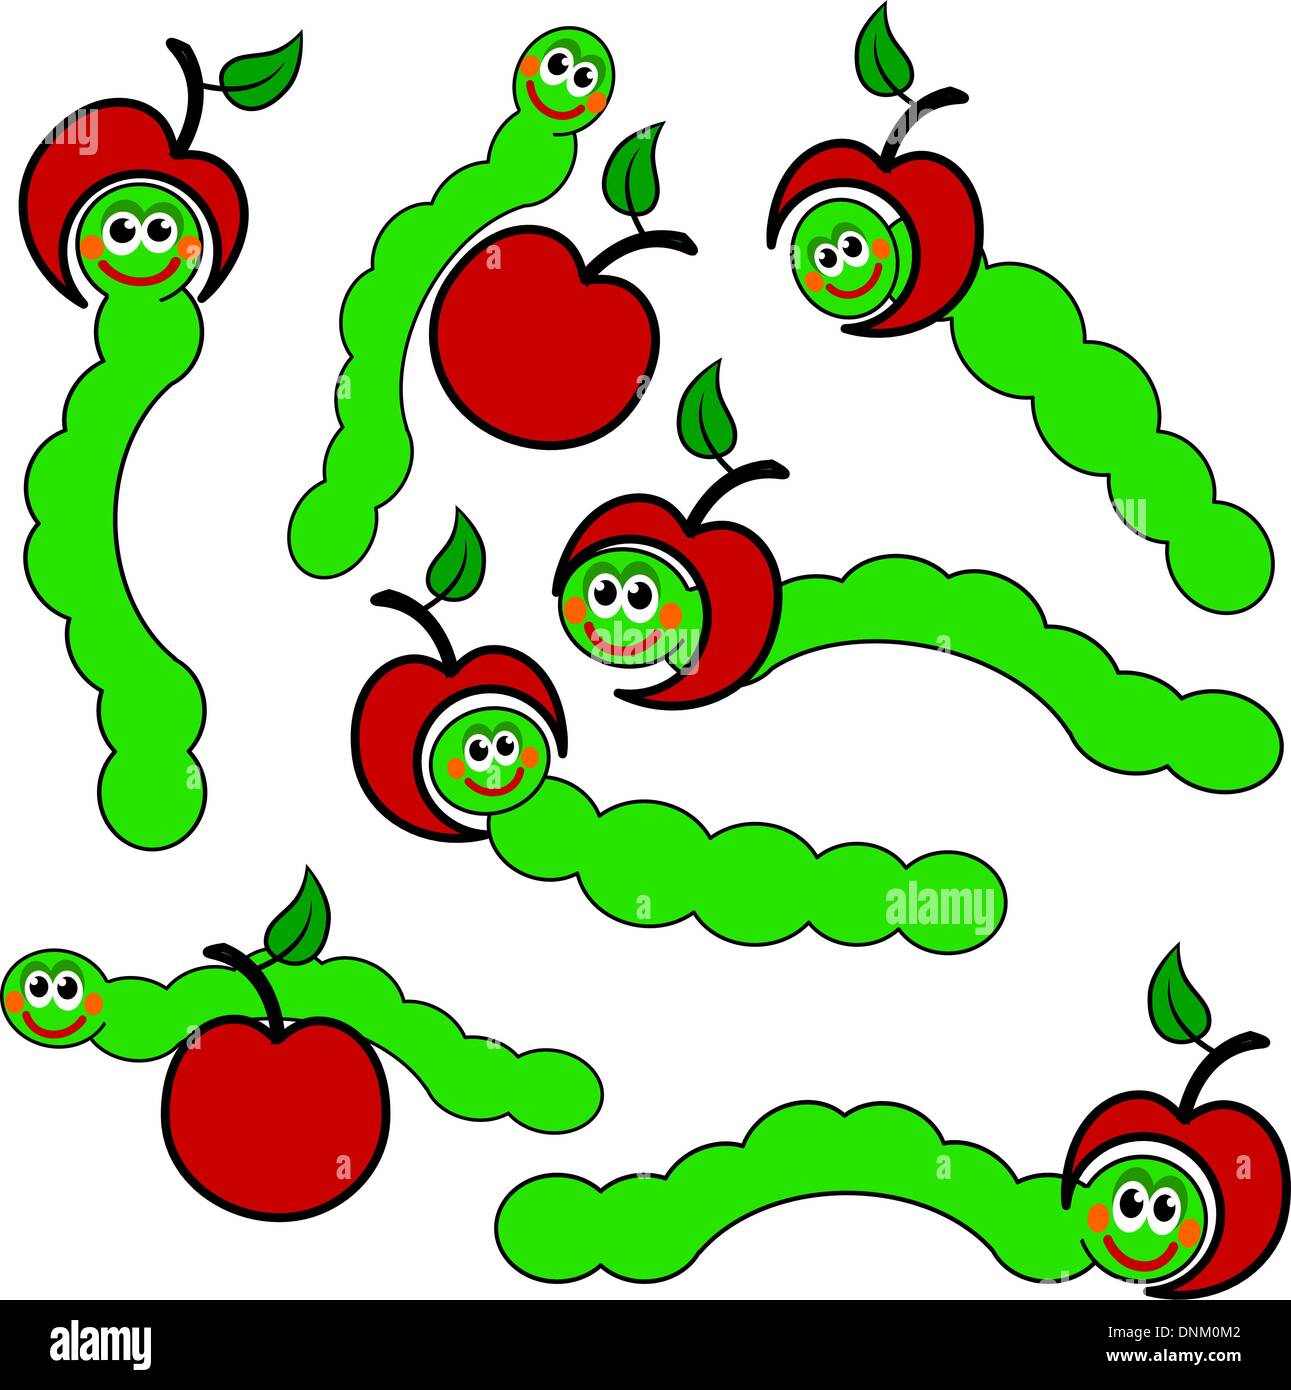 Simulation Orchard Persimmon Mangosteen Cartoon Caterpillar Apple